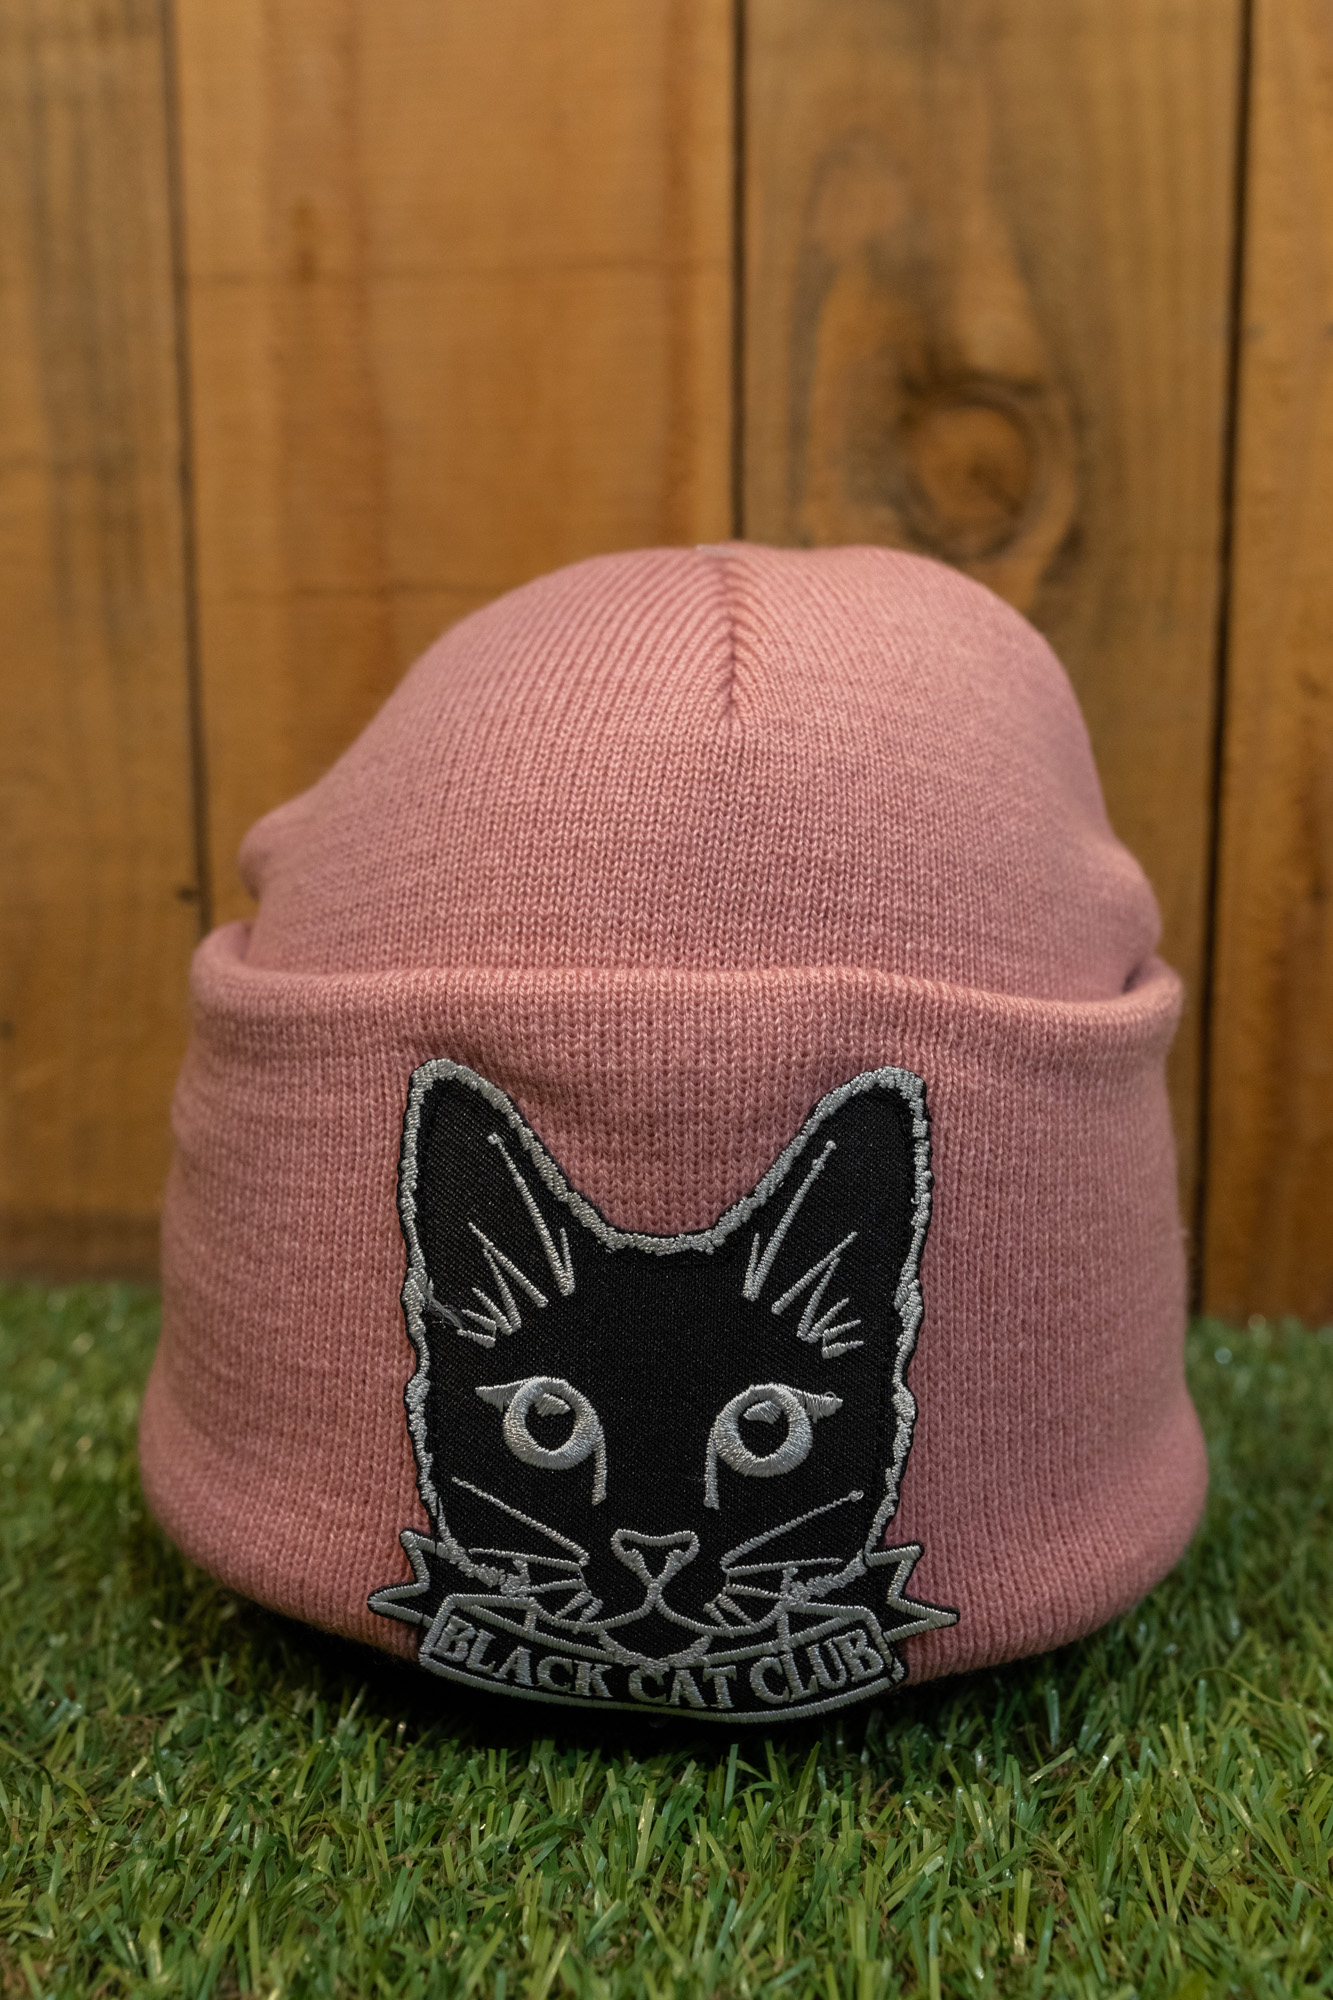 Photo bonnet anti social black cat club